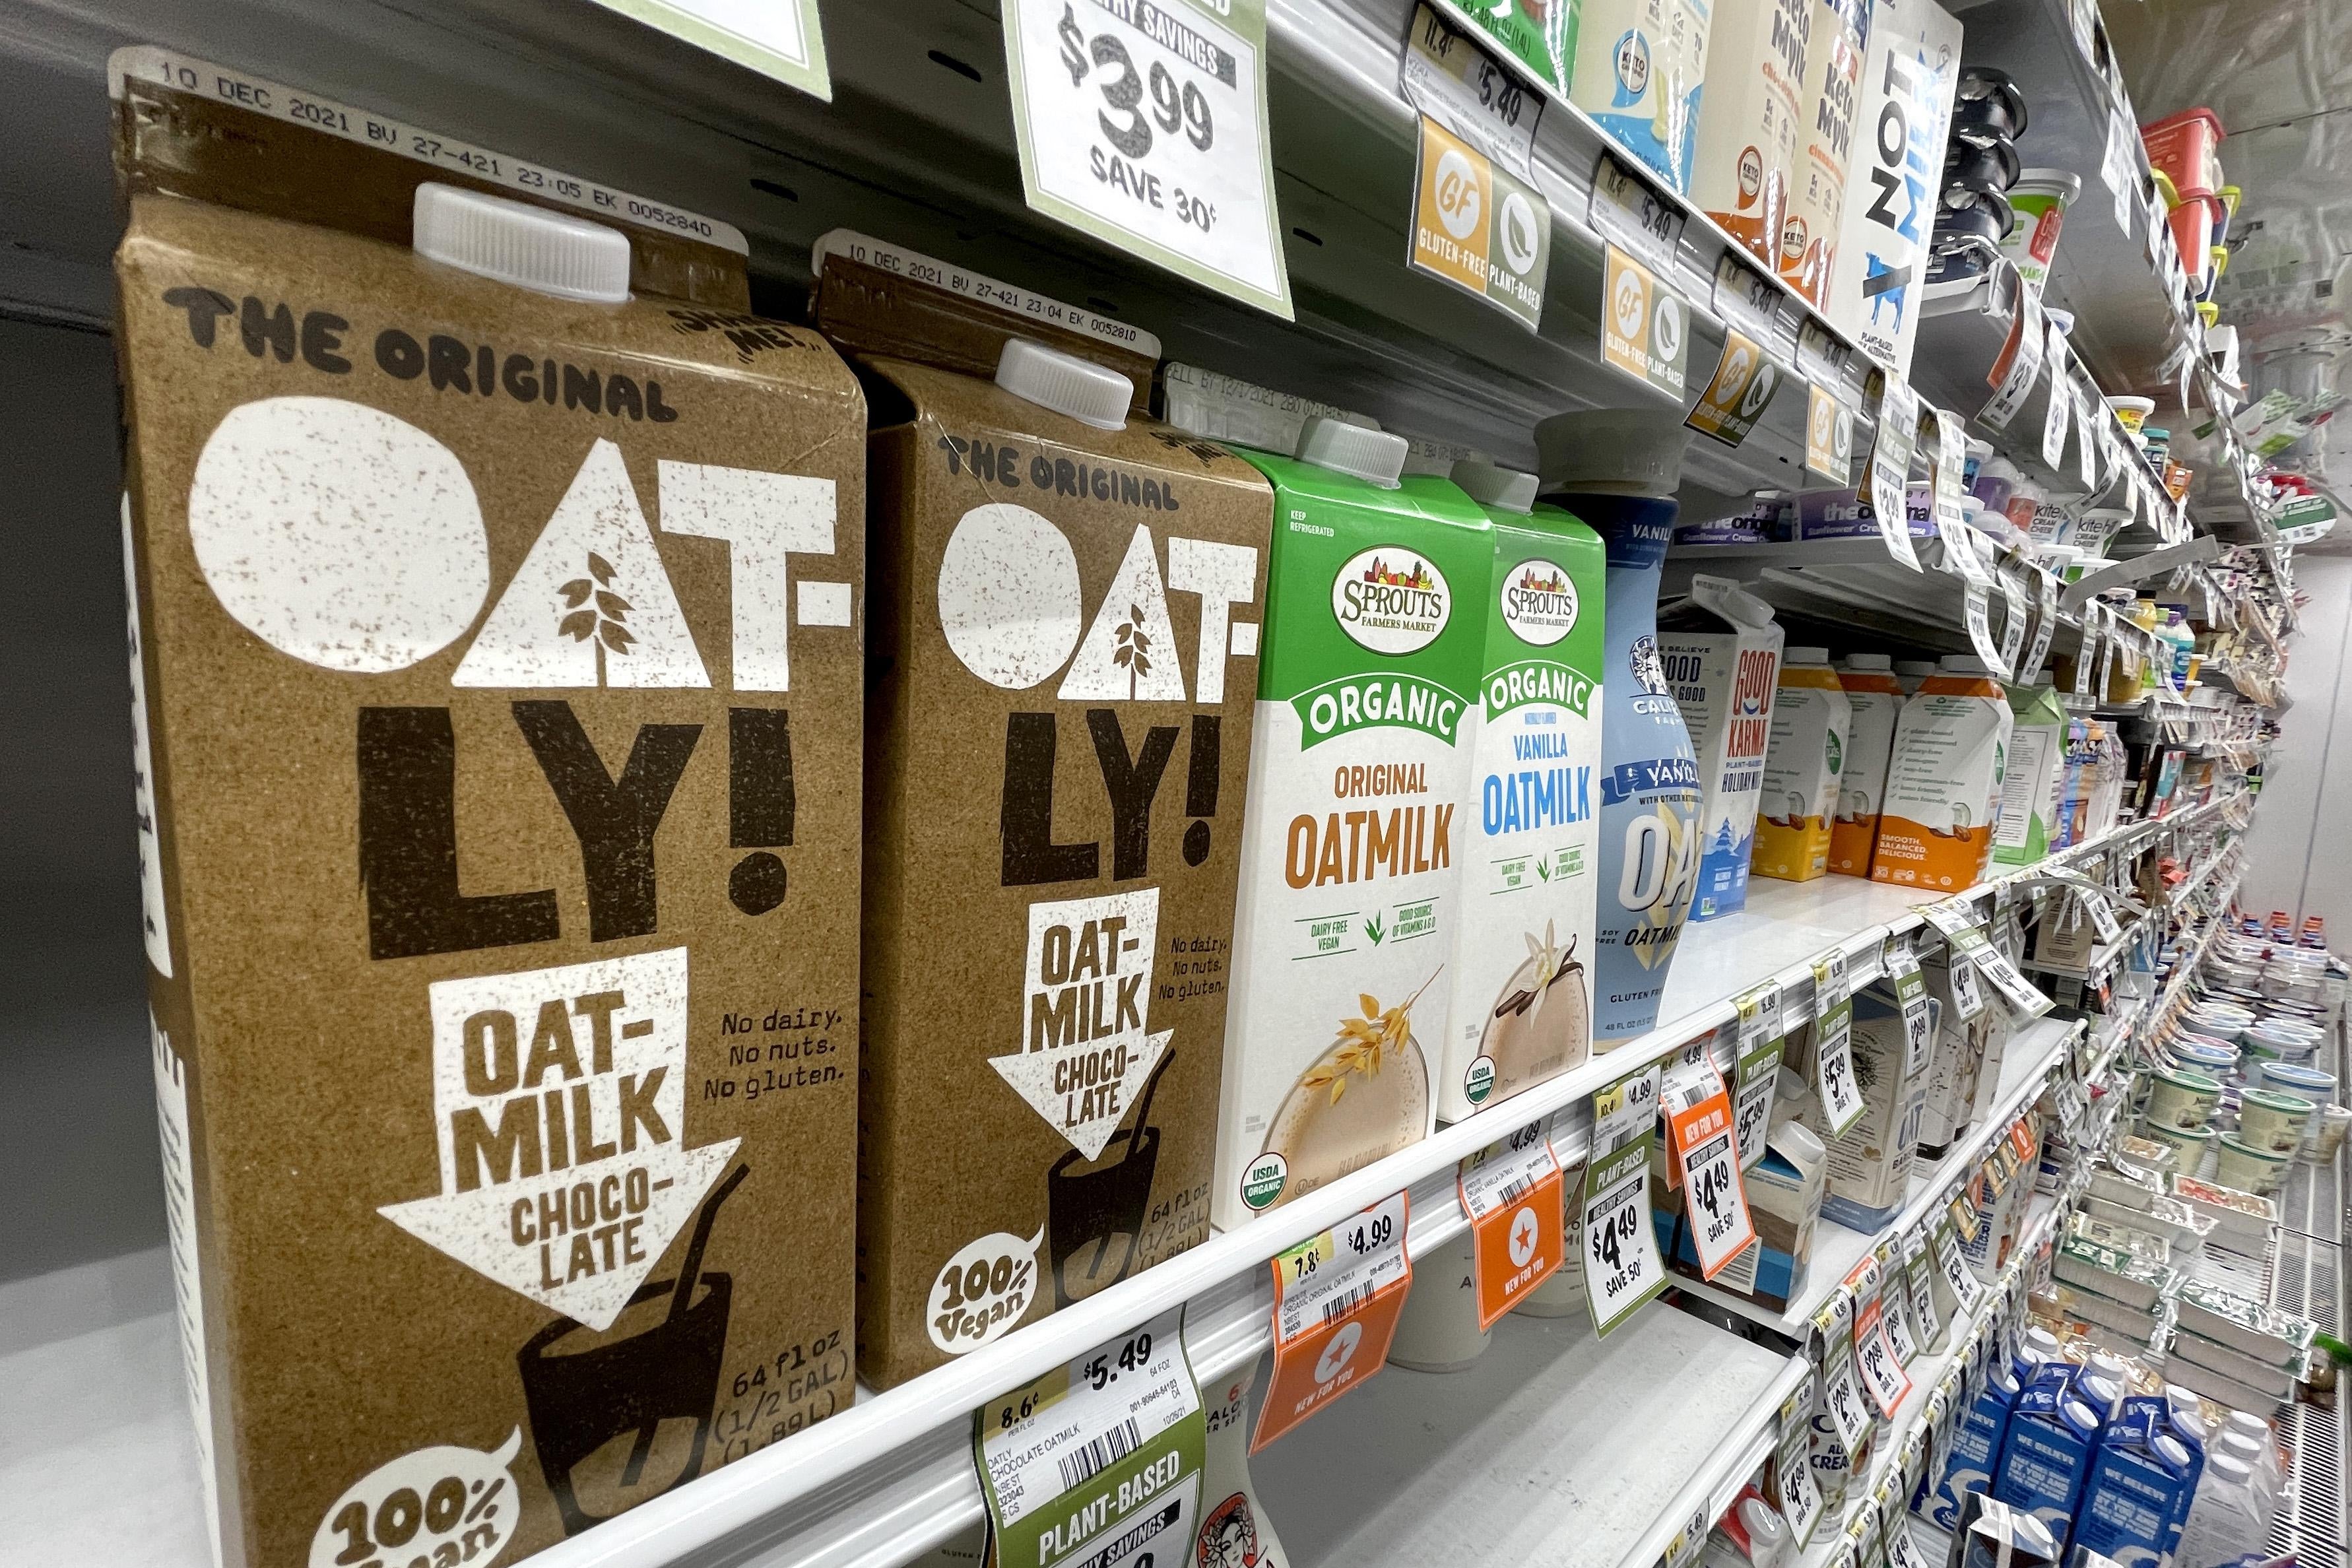 Cartons of oat milk on a supermarket shelf